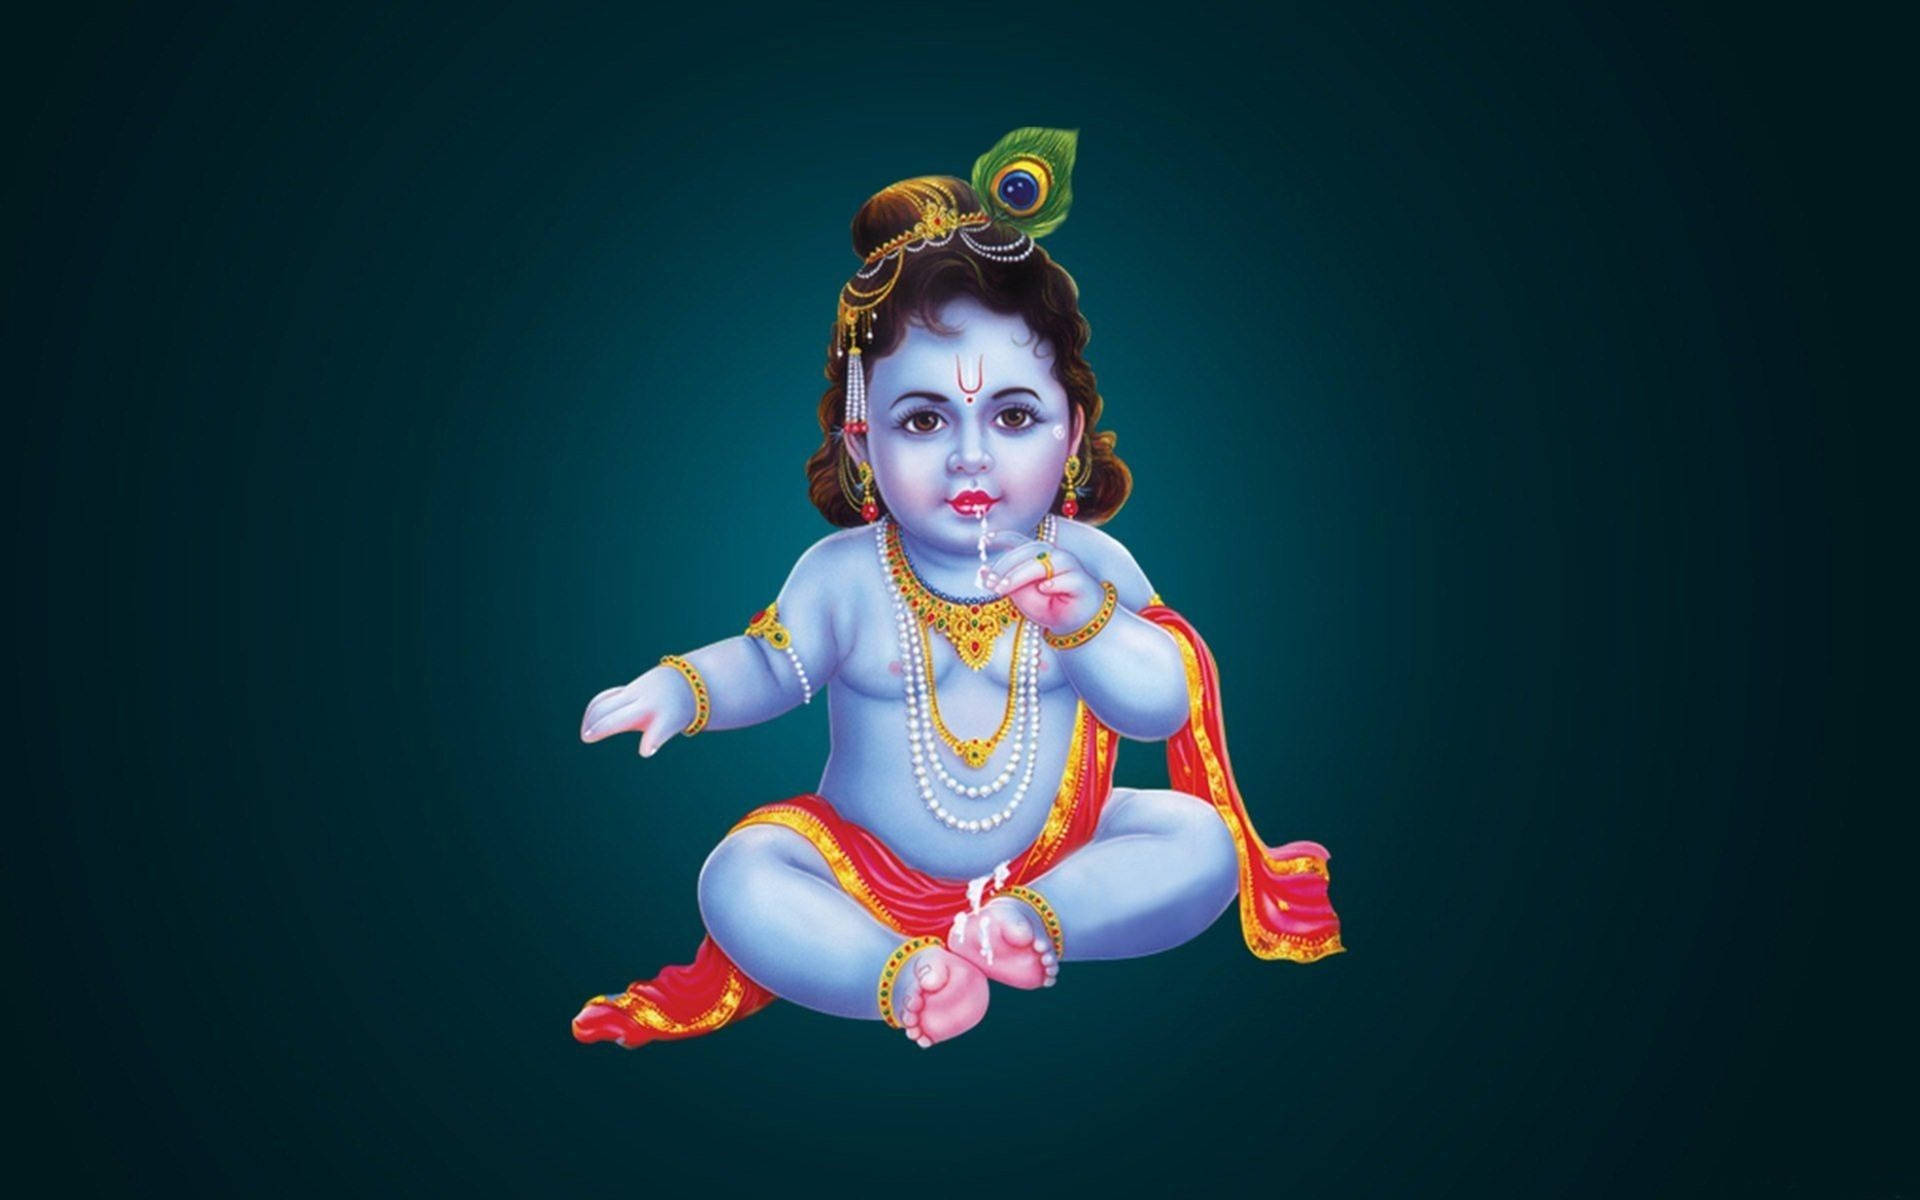 Baby Lord Krishna 4k Digital Artwork